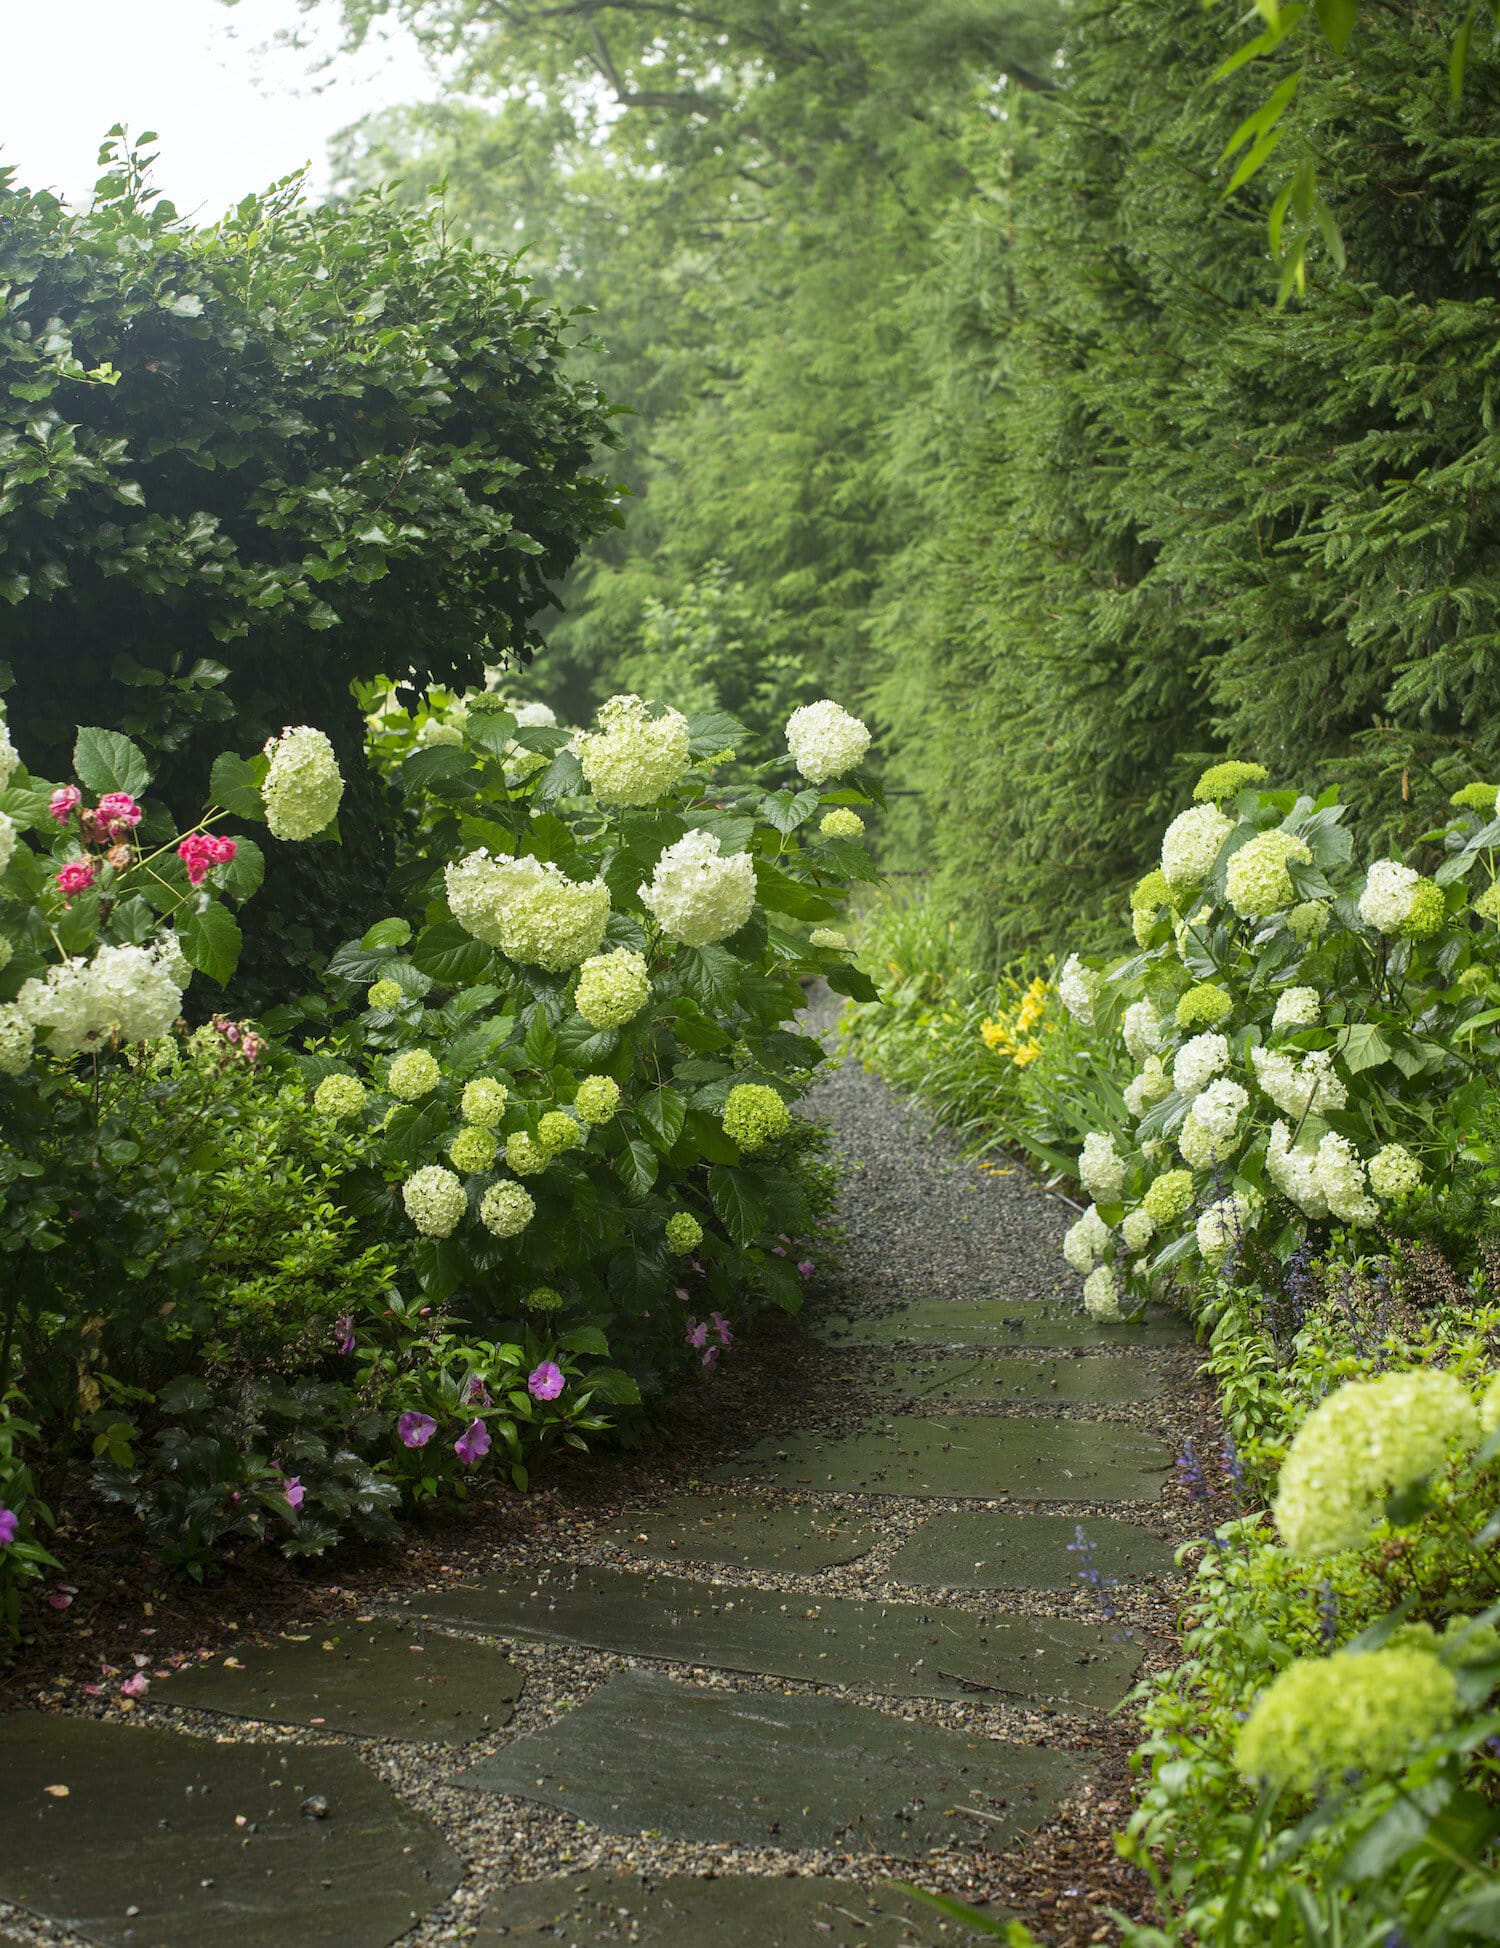 Garden path with hydrangeas and lush green foliage.